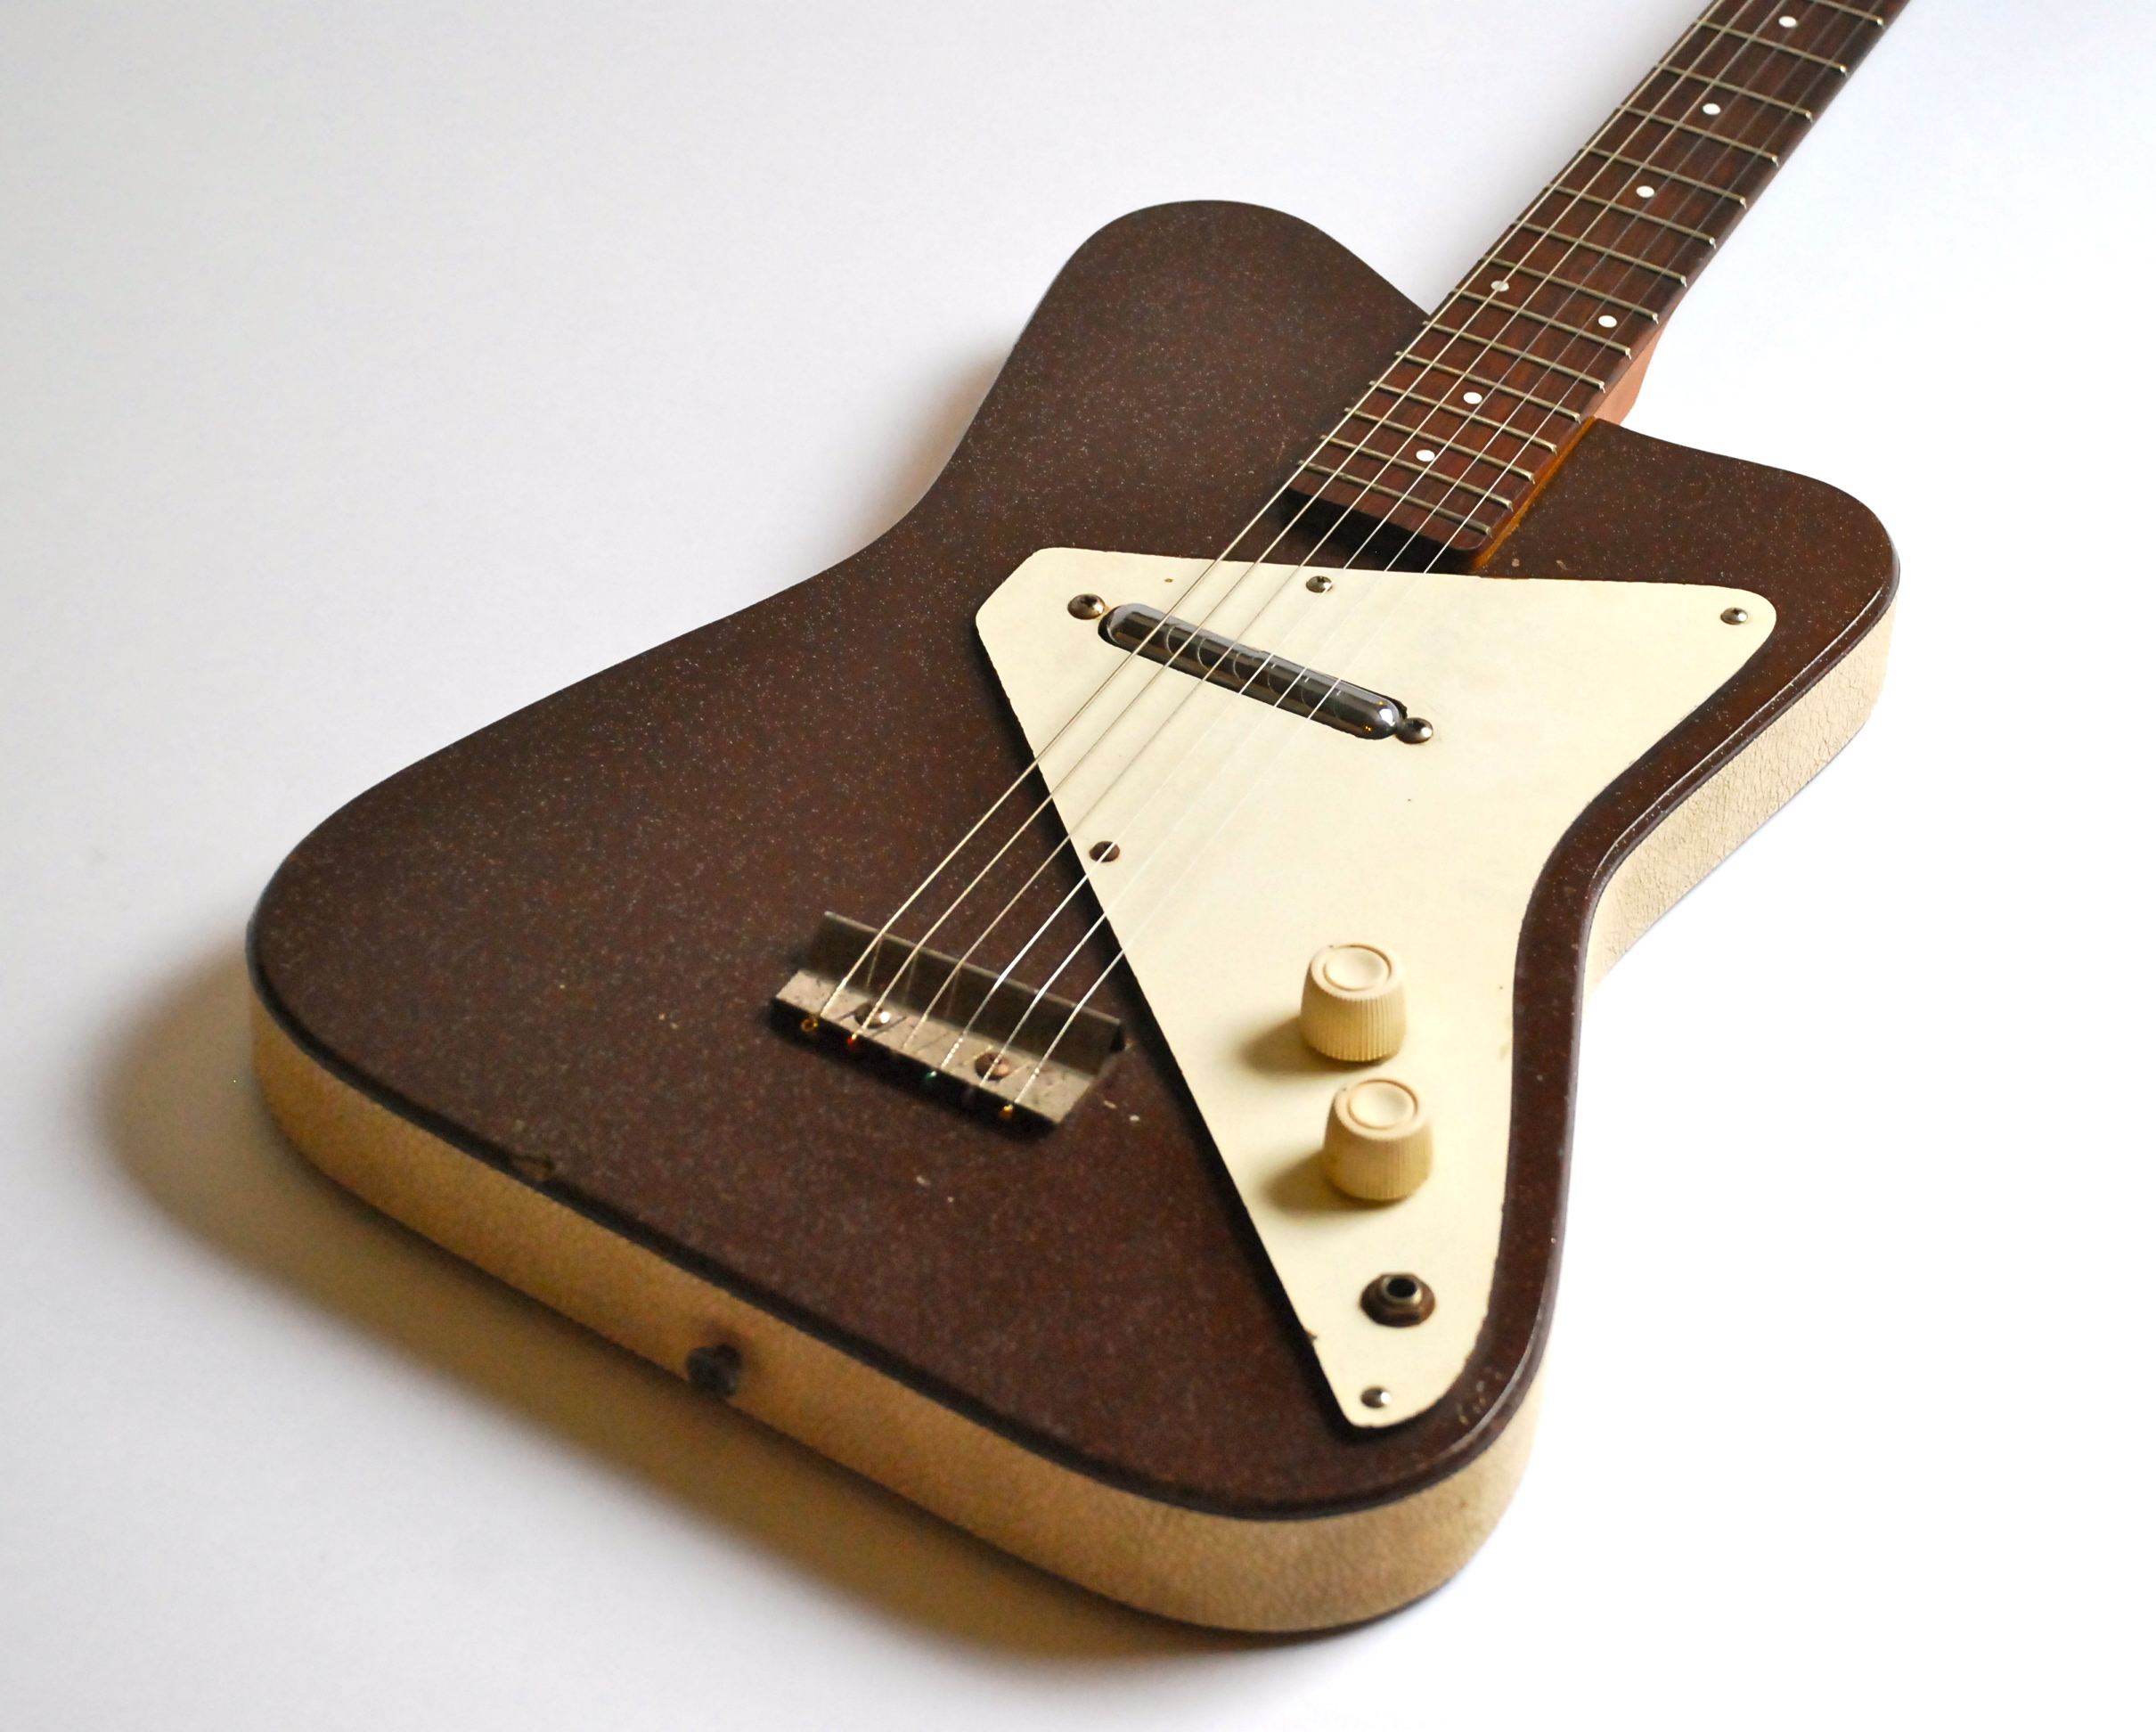 Danelectro Dano Pro 1 1963 Sparkle Brown Guitar For Sale Bass N Guitar